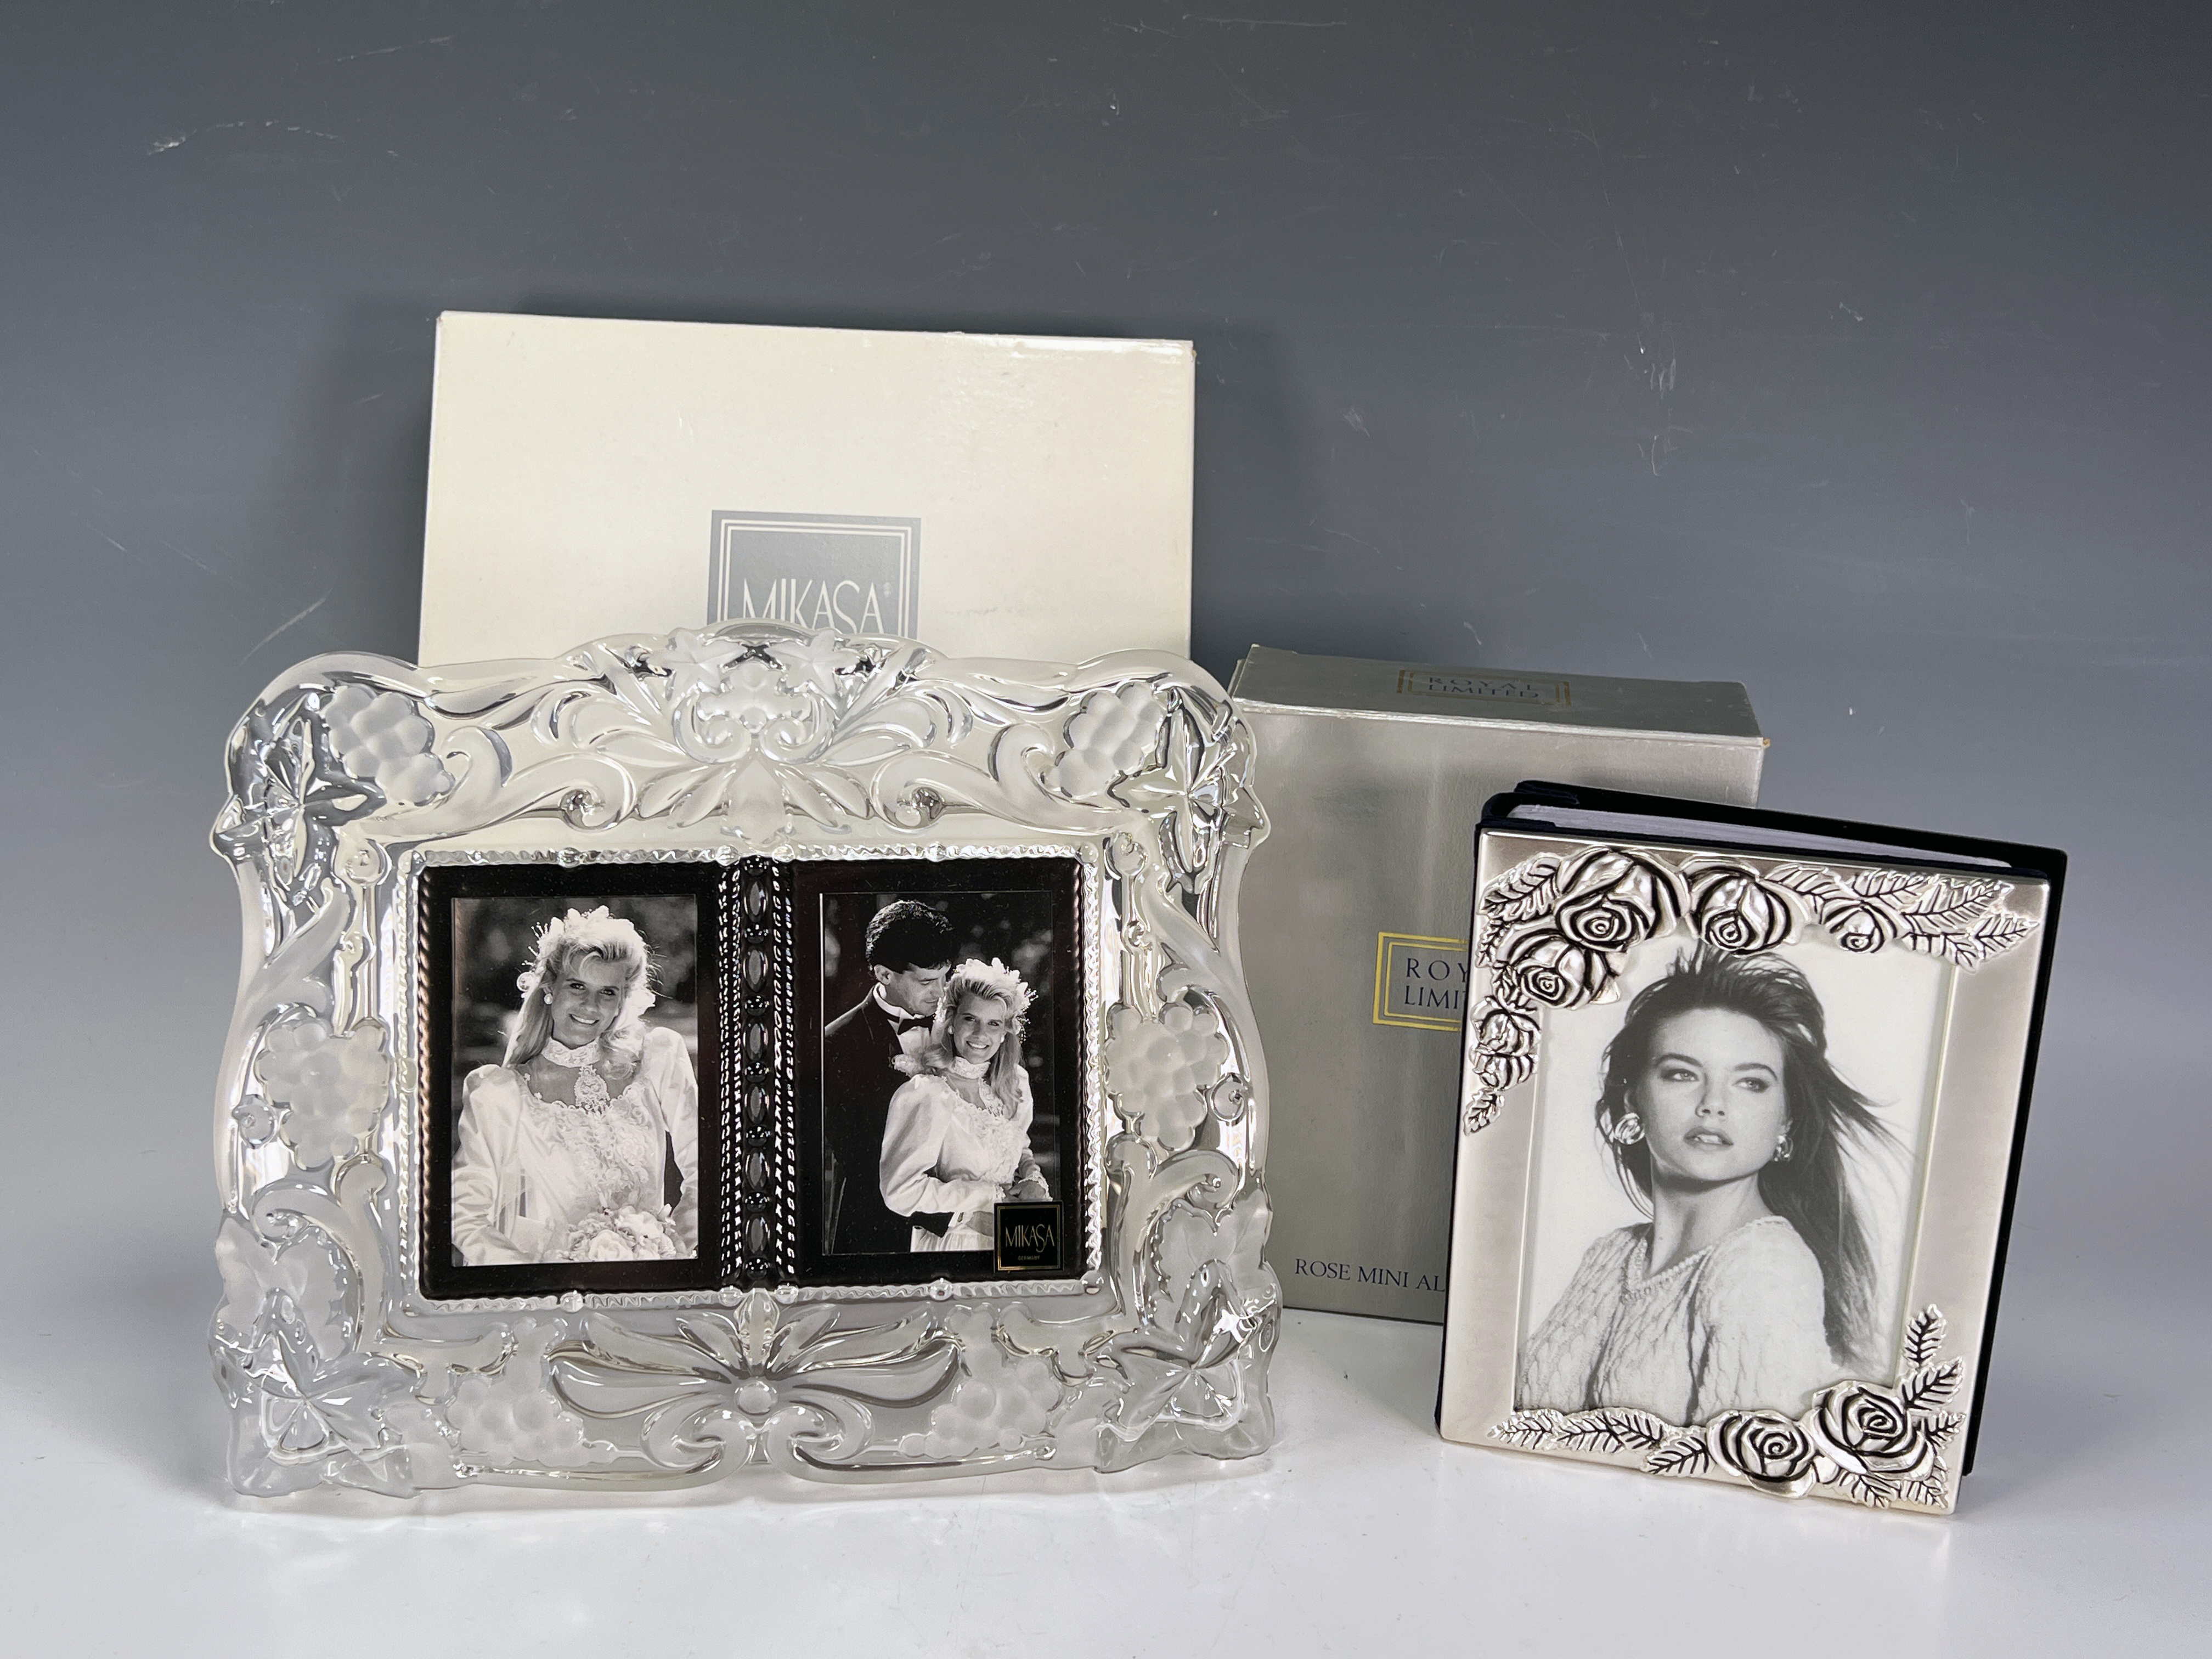 Mikasa Vintage Memories Frame & Royal Limited Rose Mini Album Grand In Box image 1